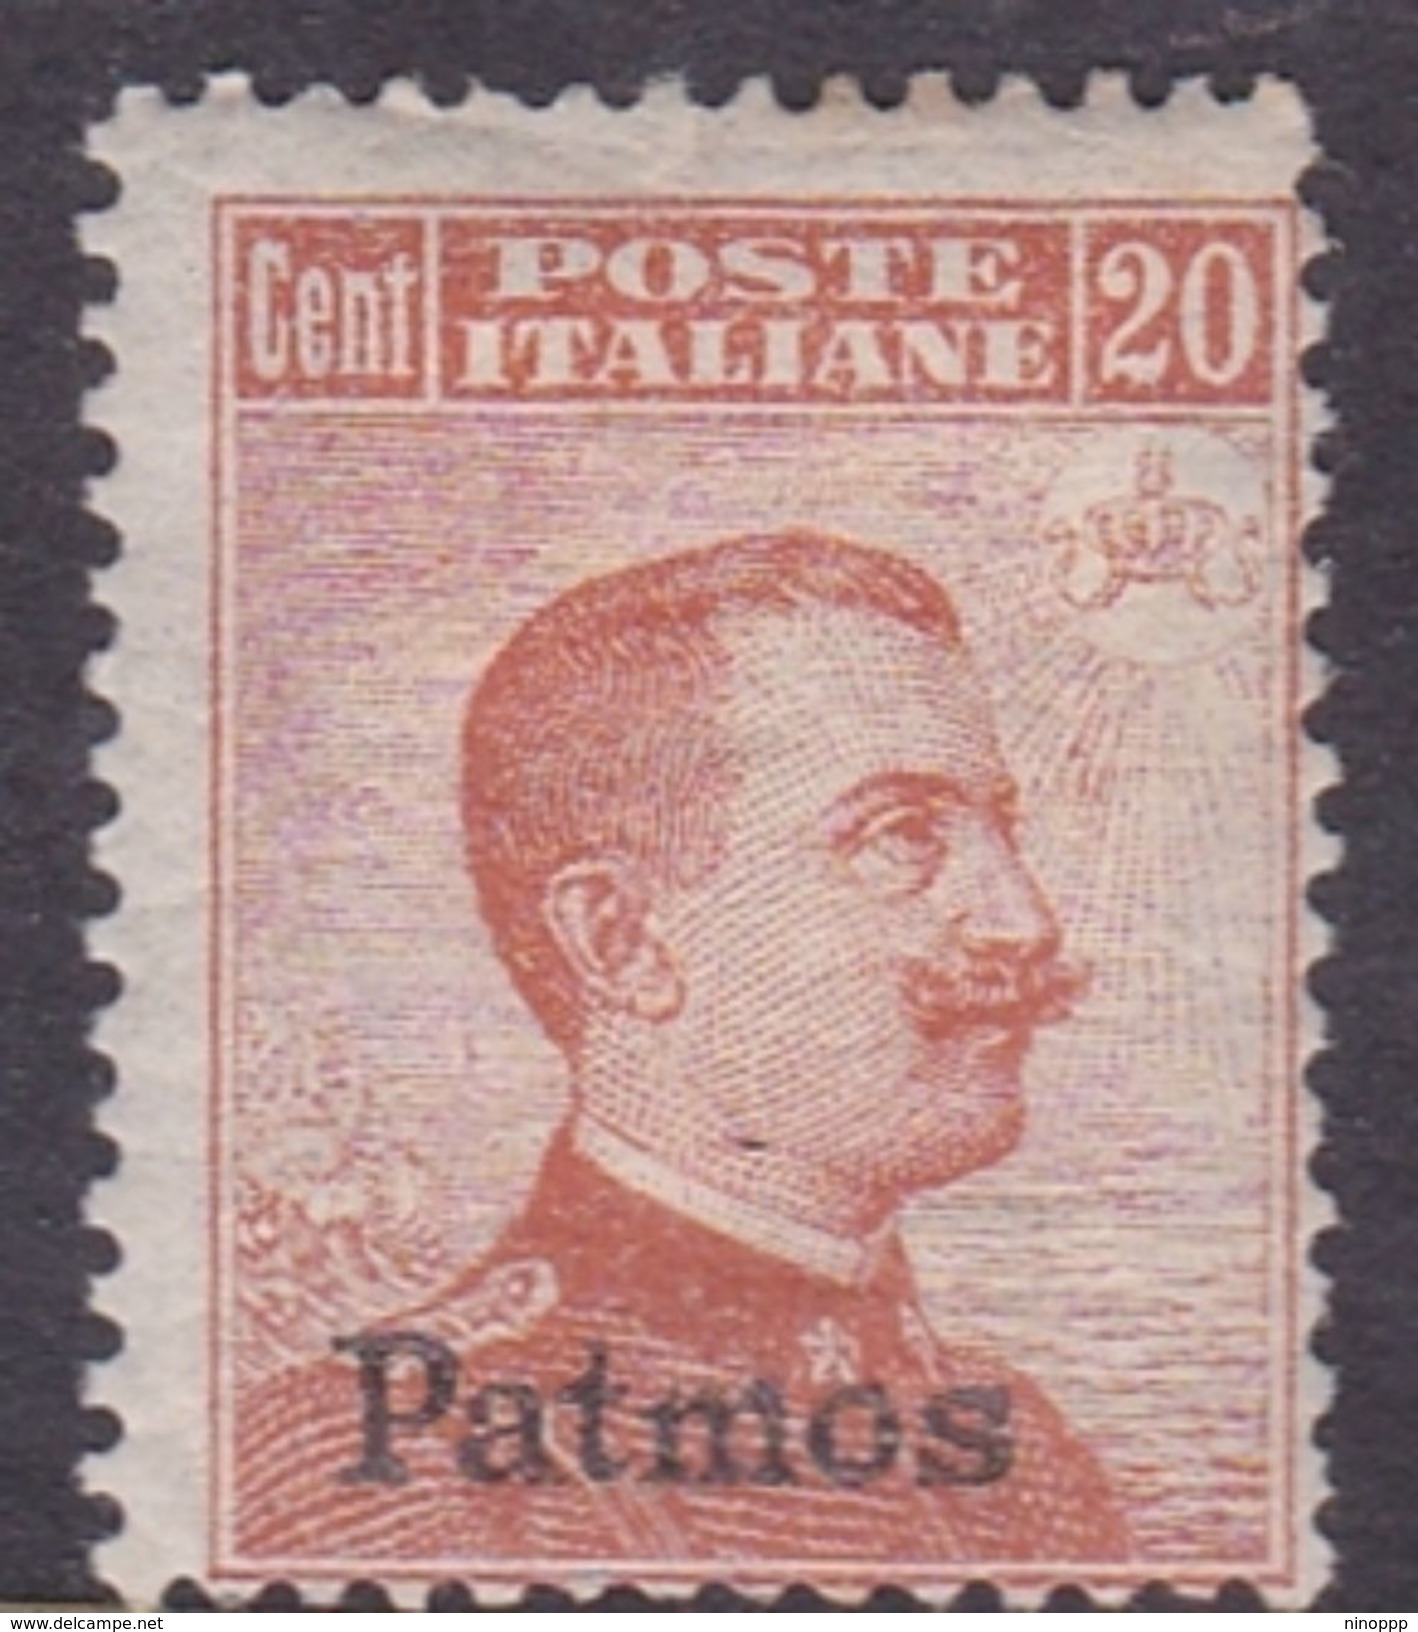 Italy-Colonies And Territories-Aegean-Patmo S9 1917 20c Brown Orange No Watermark MH - Egée (Patmo)